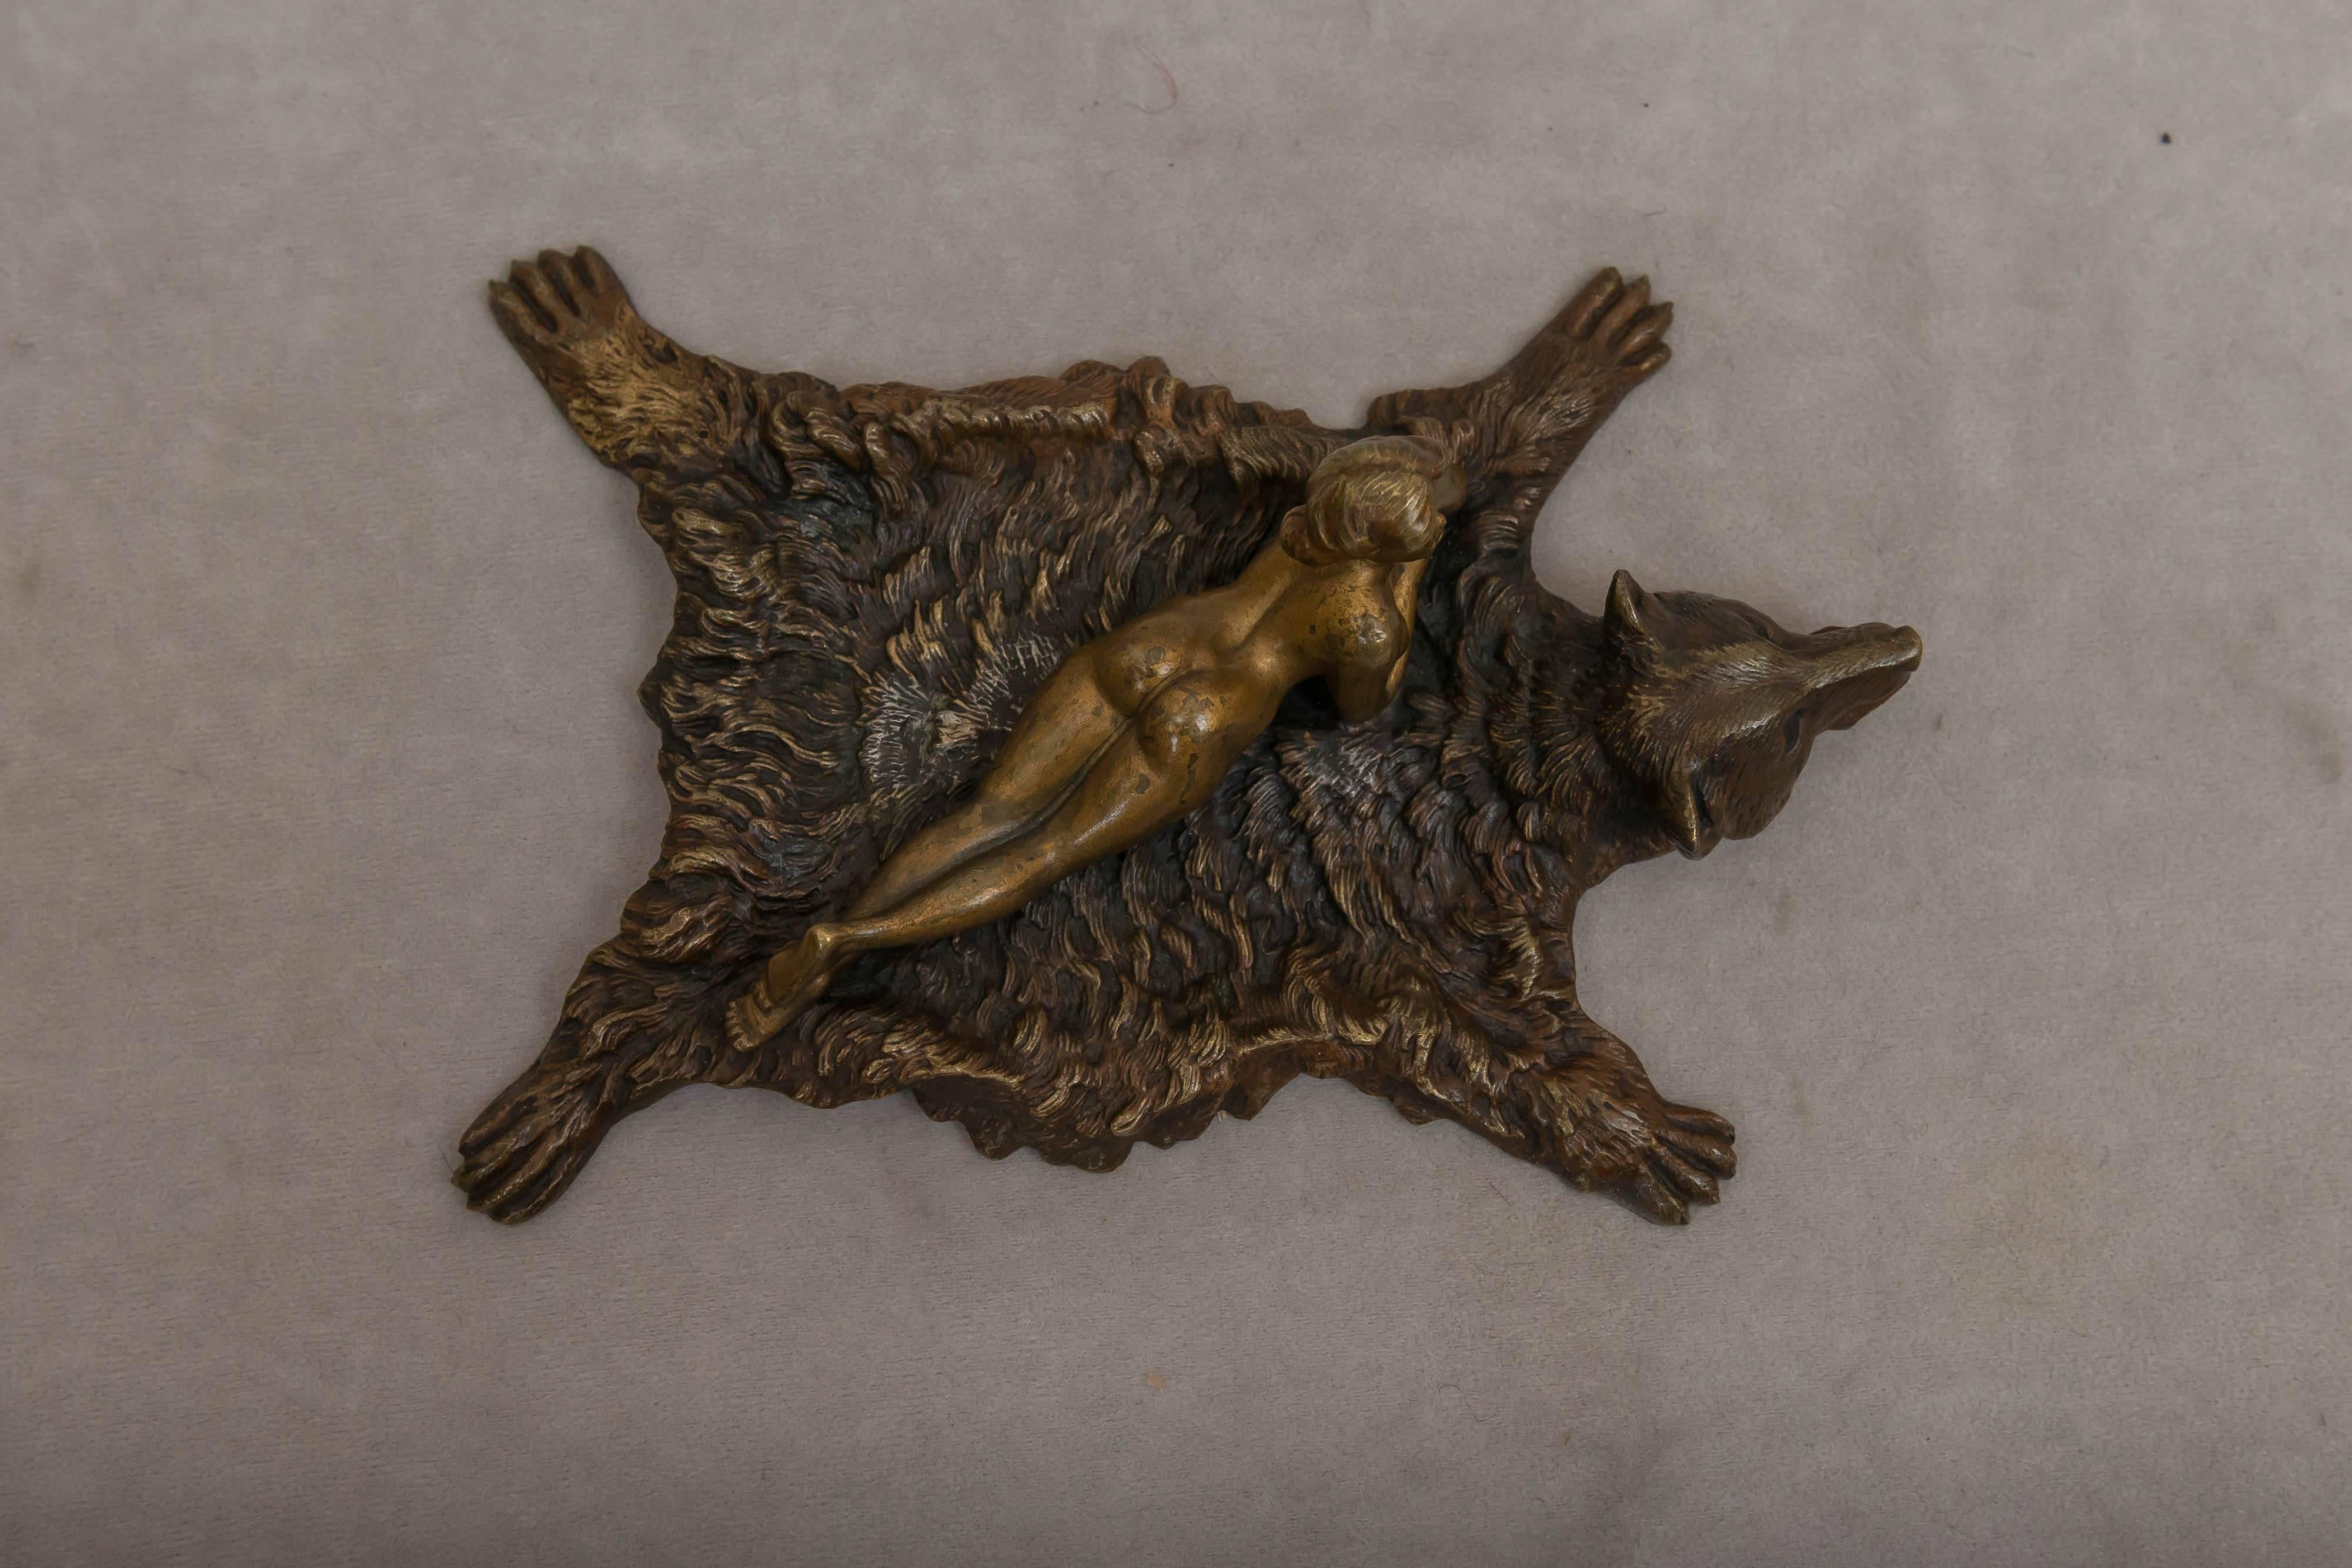 Early 20th Century Austrian Bronze of a Nude Woman Lying on a Bearskin Rug by Franz Bergmann